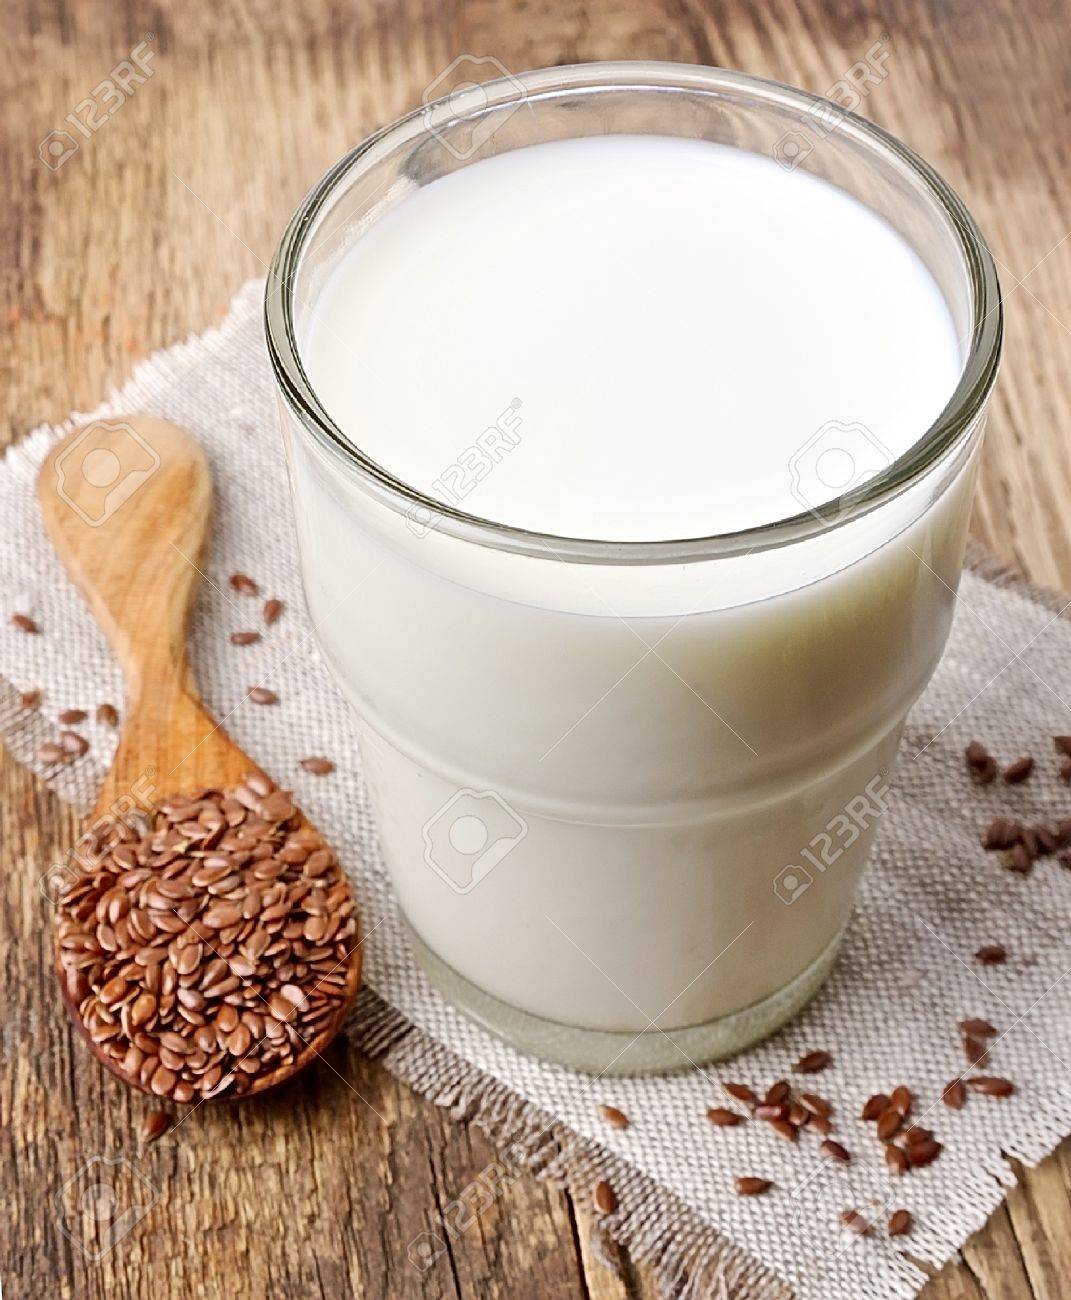 benefits of flax milk